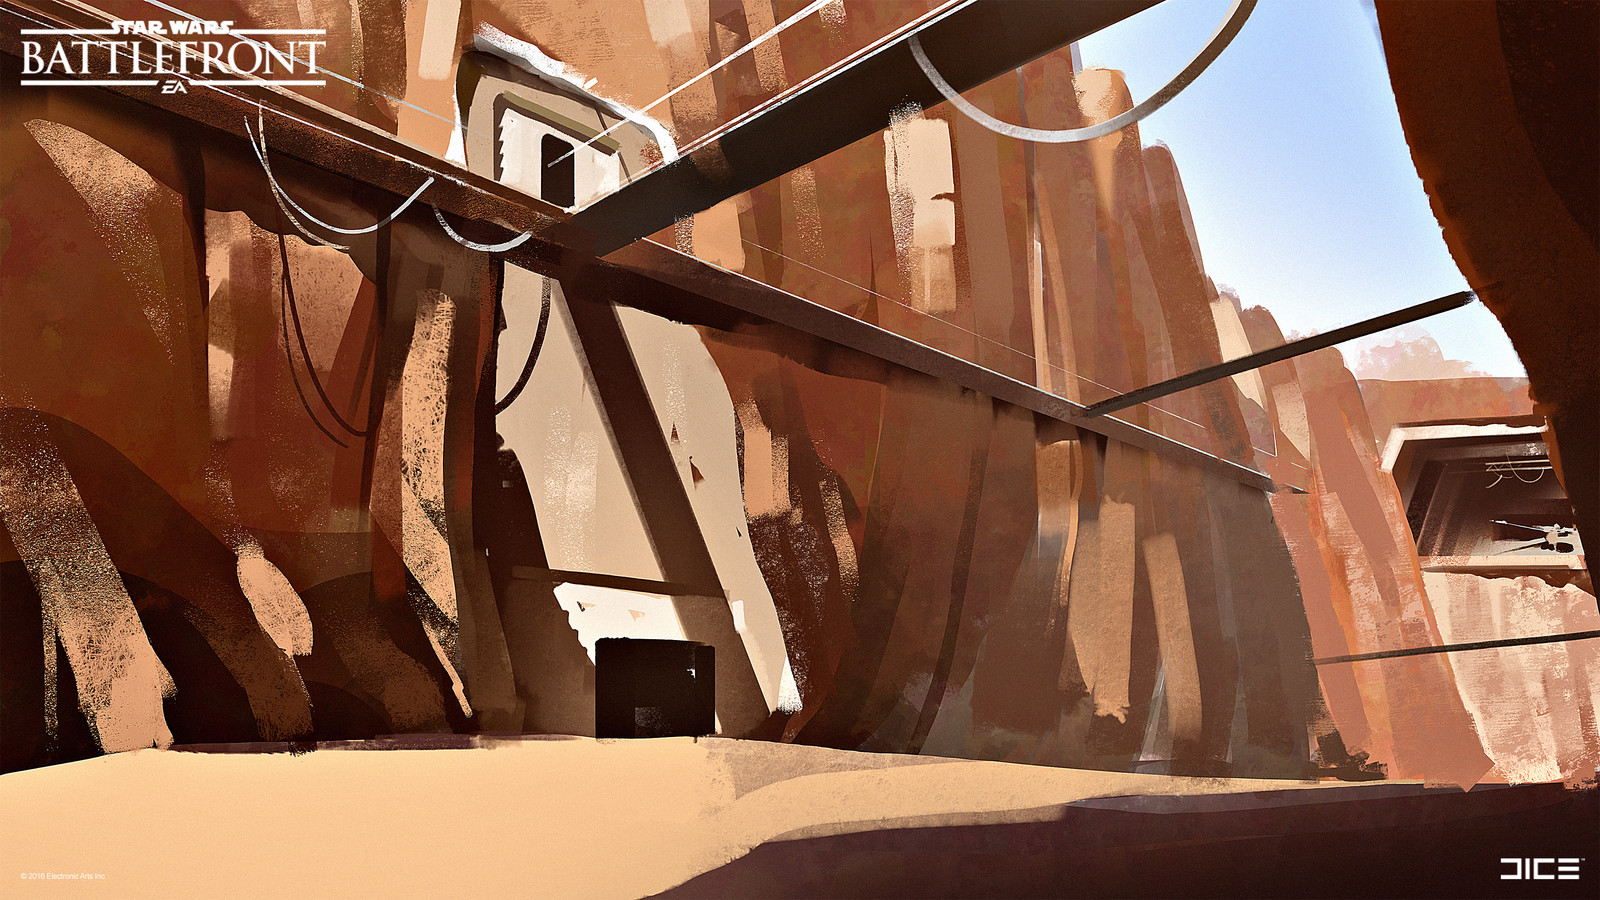 Tatooine Concept Art for the 2015 Star Wars Battlefront game. (2014)